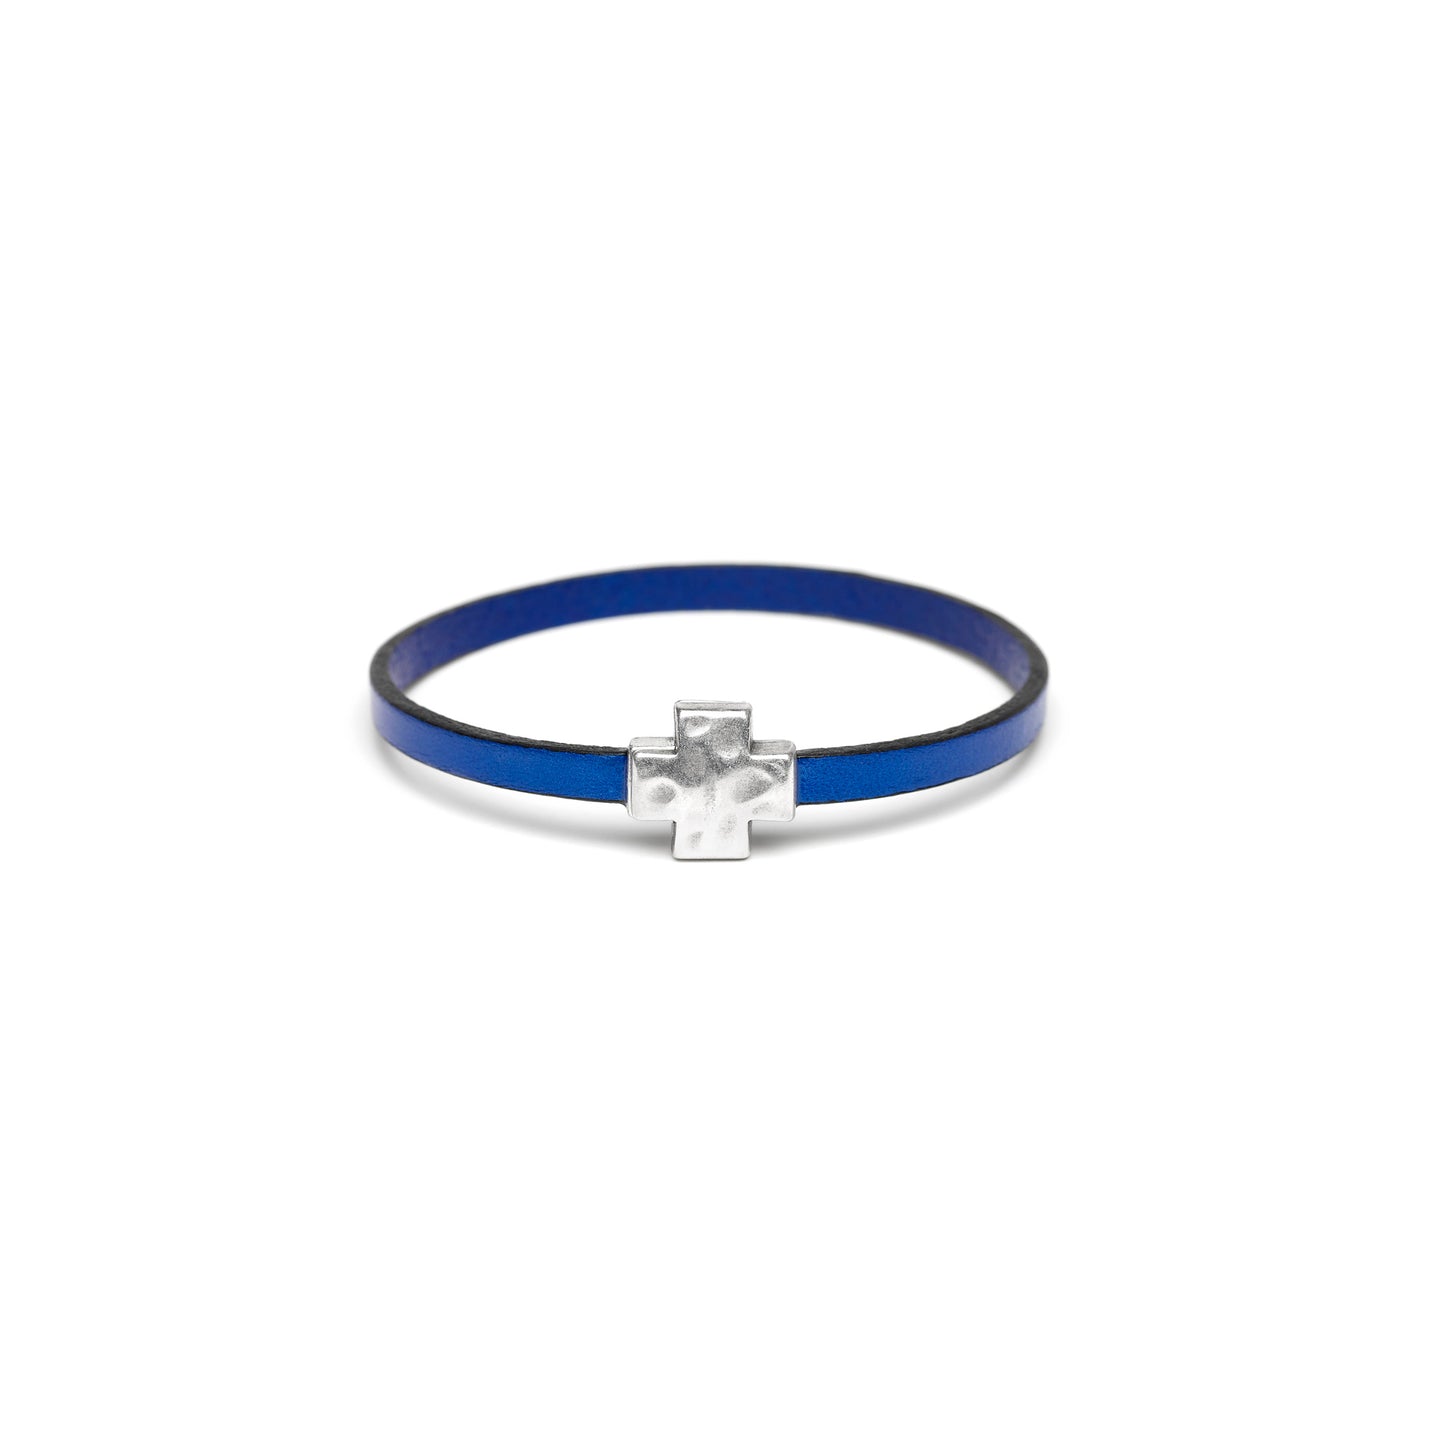 "Wrap it Up Bracelet" with Silver Cross - Single Length - Electric Blue